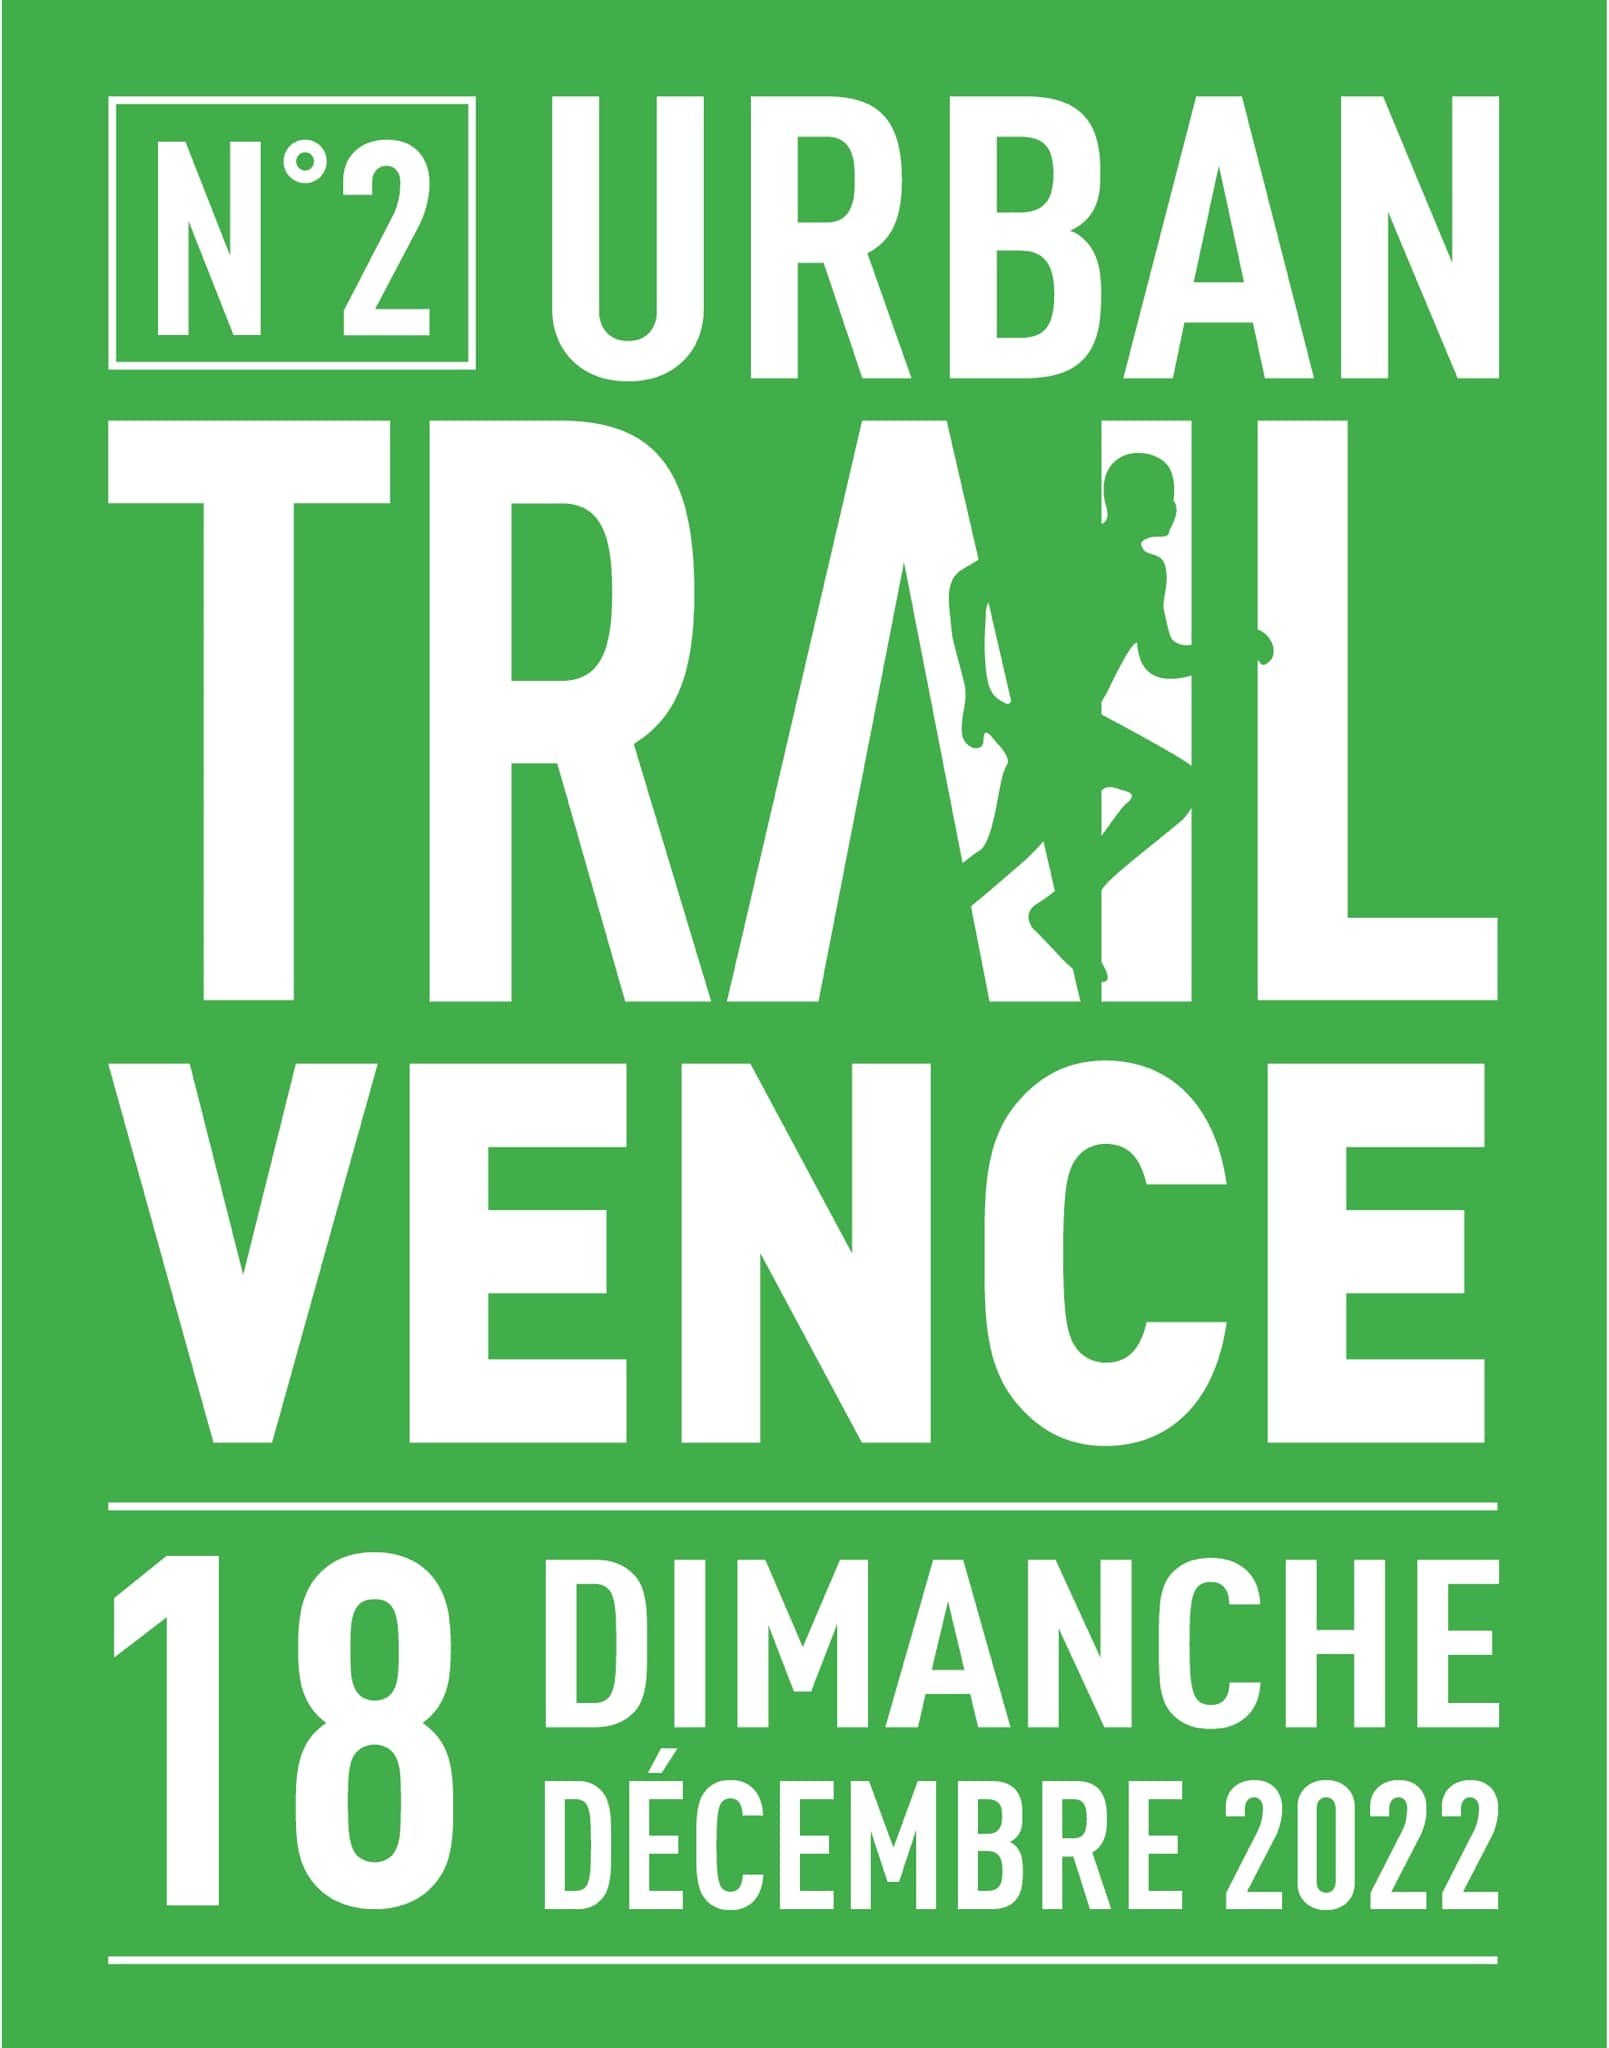 URBAN TRAIL DE VENCE 2022